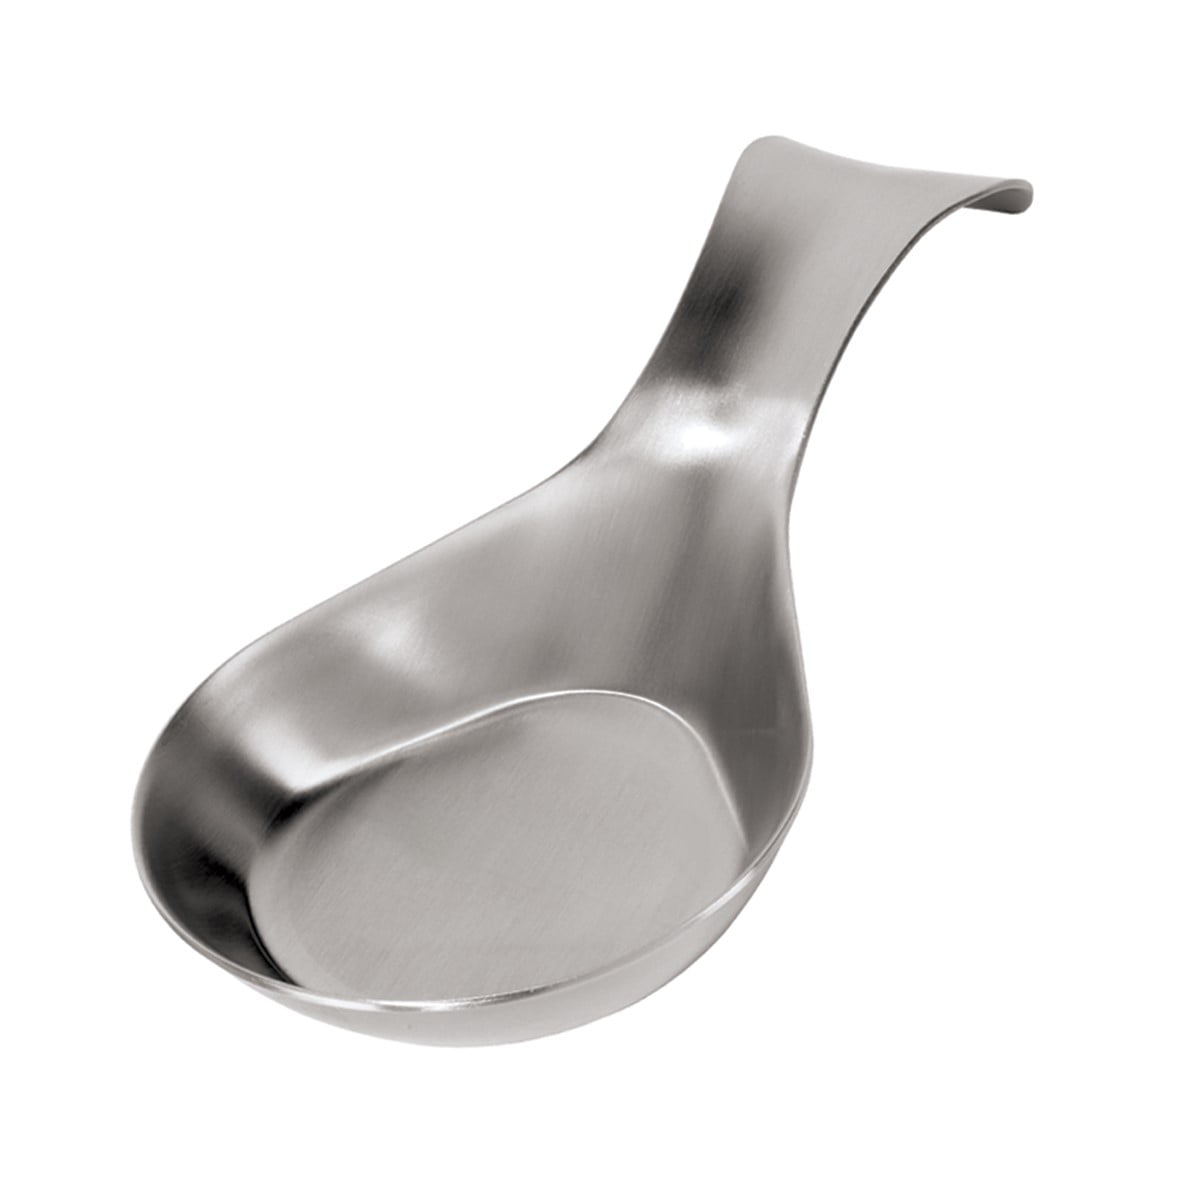 Oggi 7635 Stainless Steel Spoon Rest by Oggi 